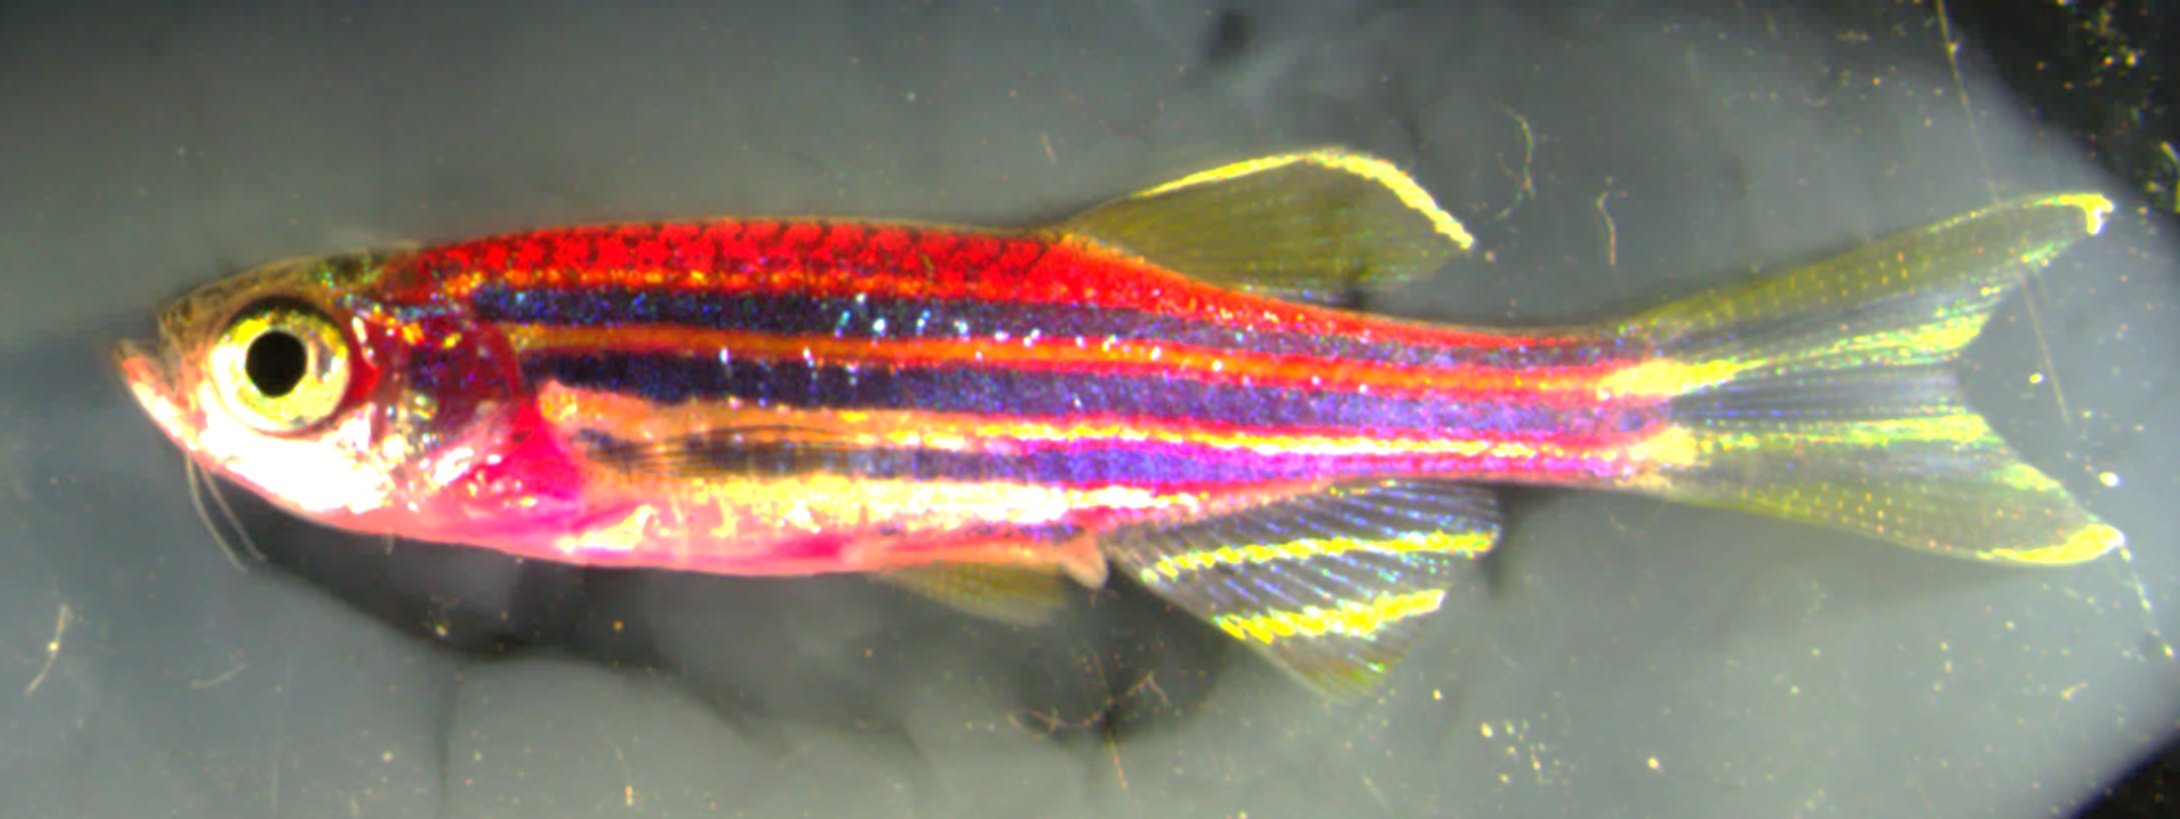 rainbow fish